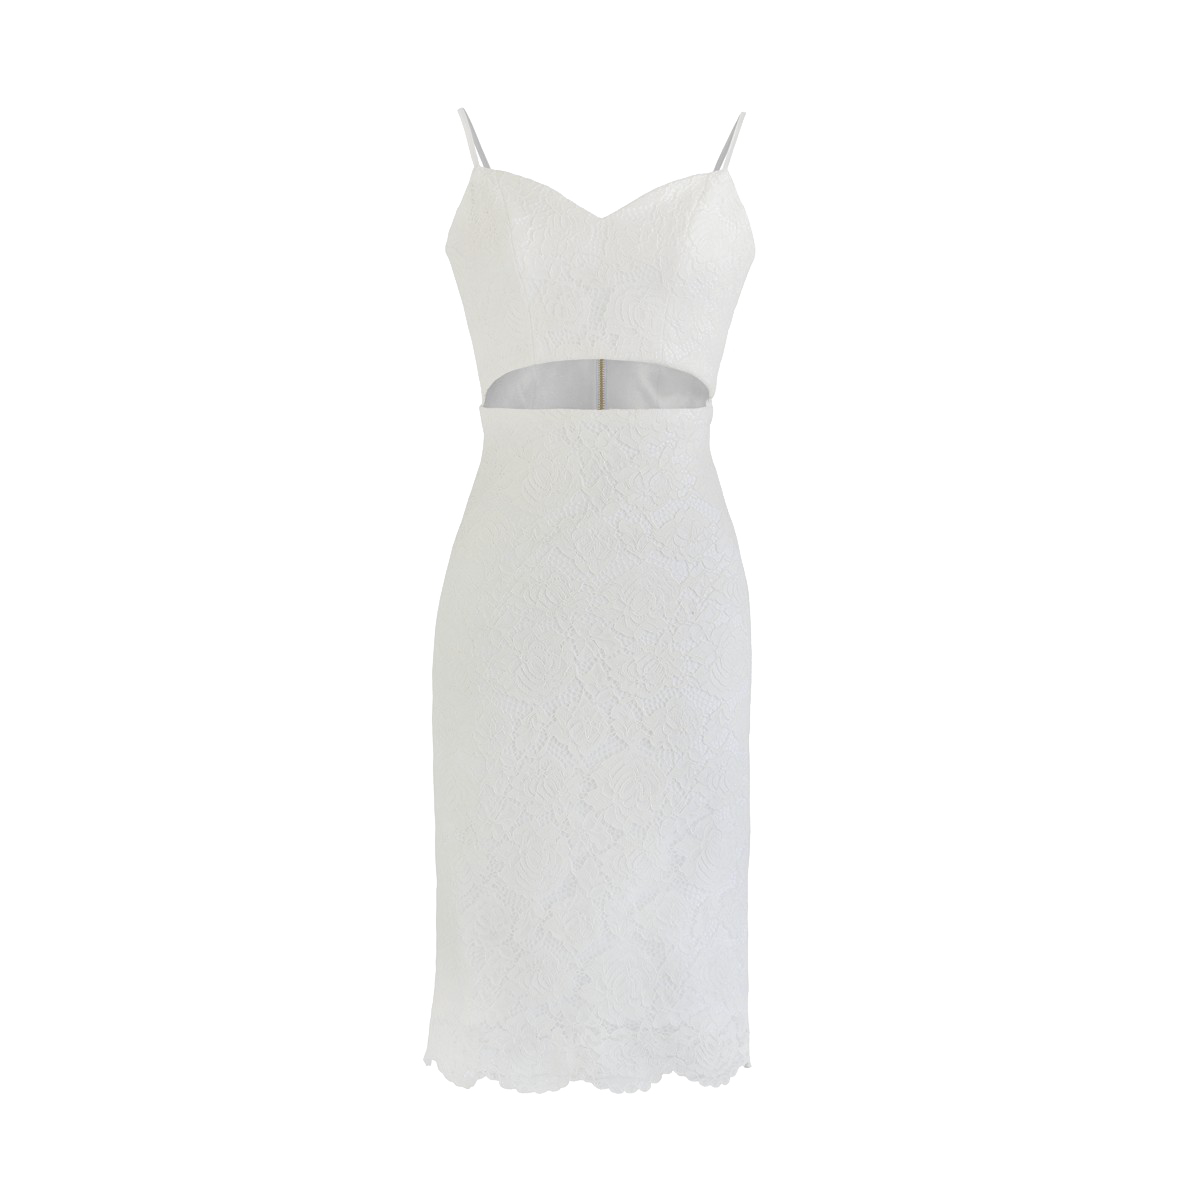 White Dress Transparent Image